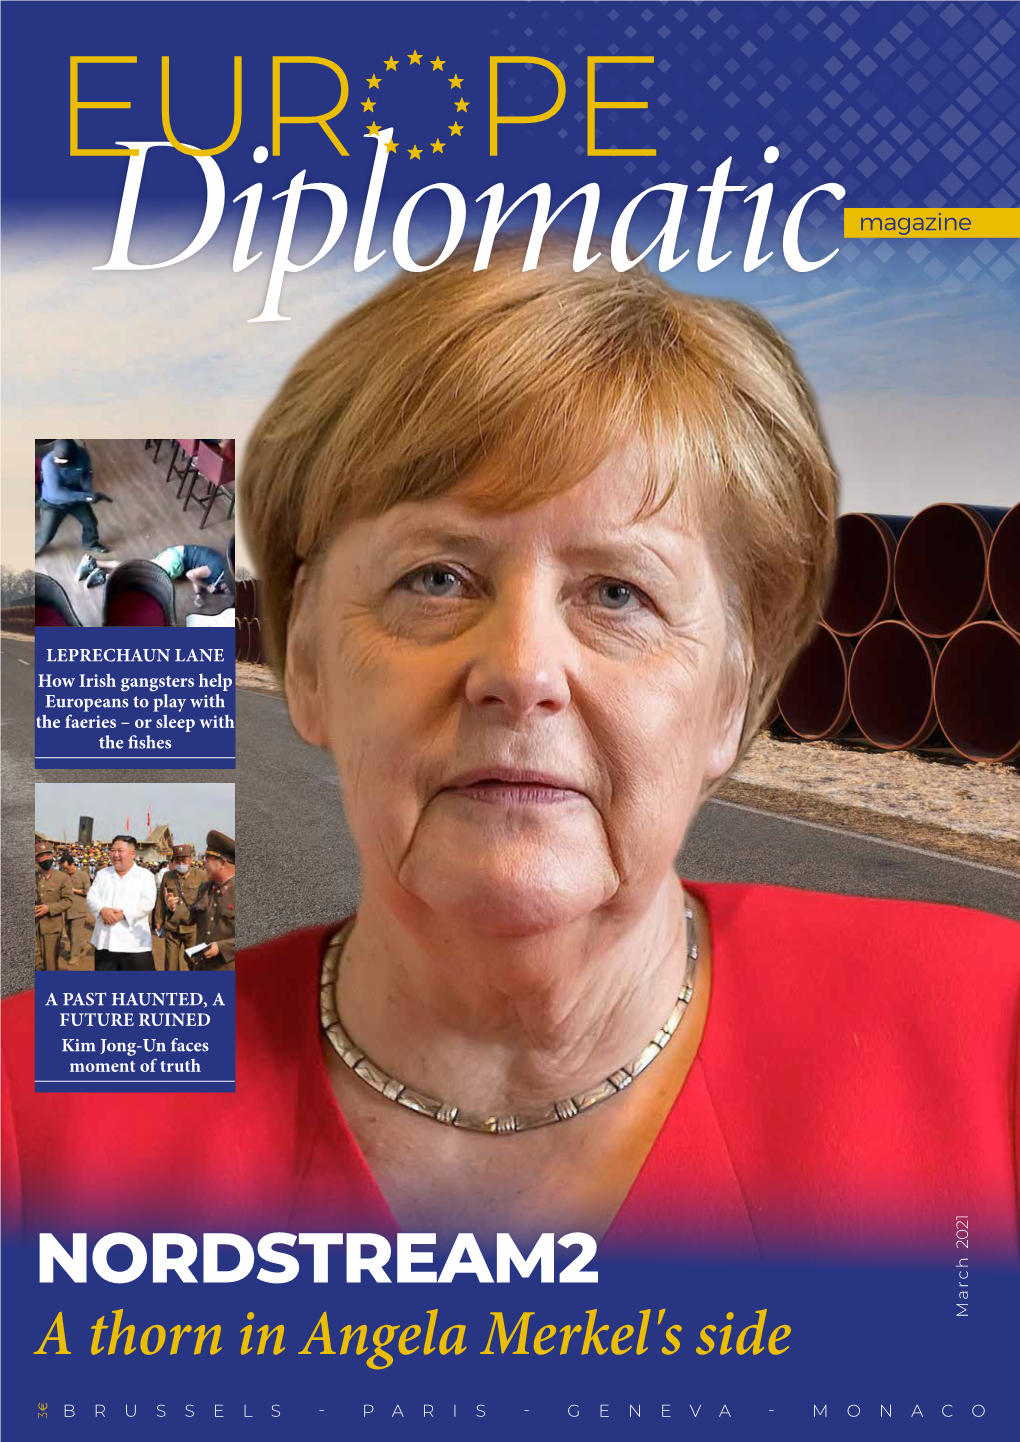 NORDSTREAM2 a Thorn in Angela Merkel's Side 2021 March E